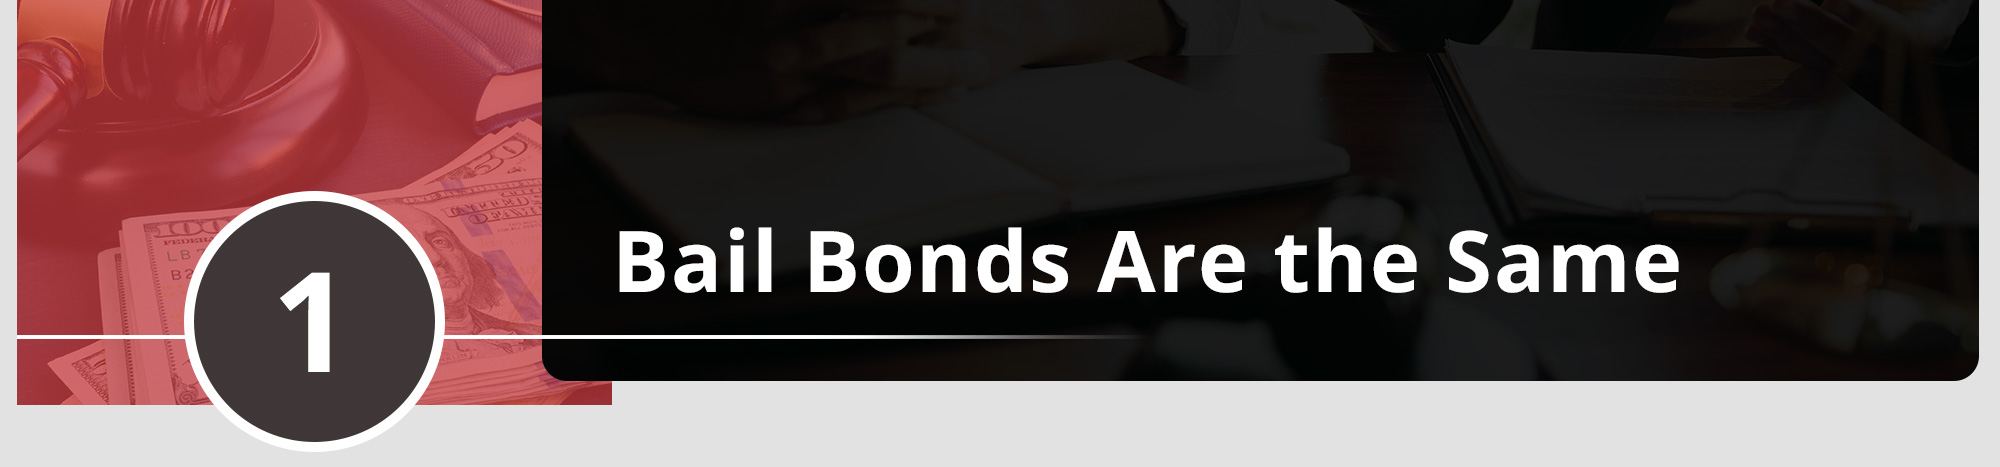 Bail Bonds Are the Same